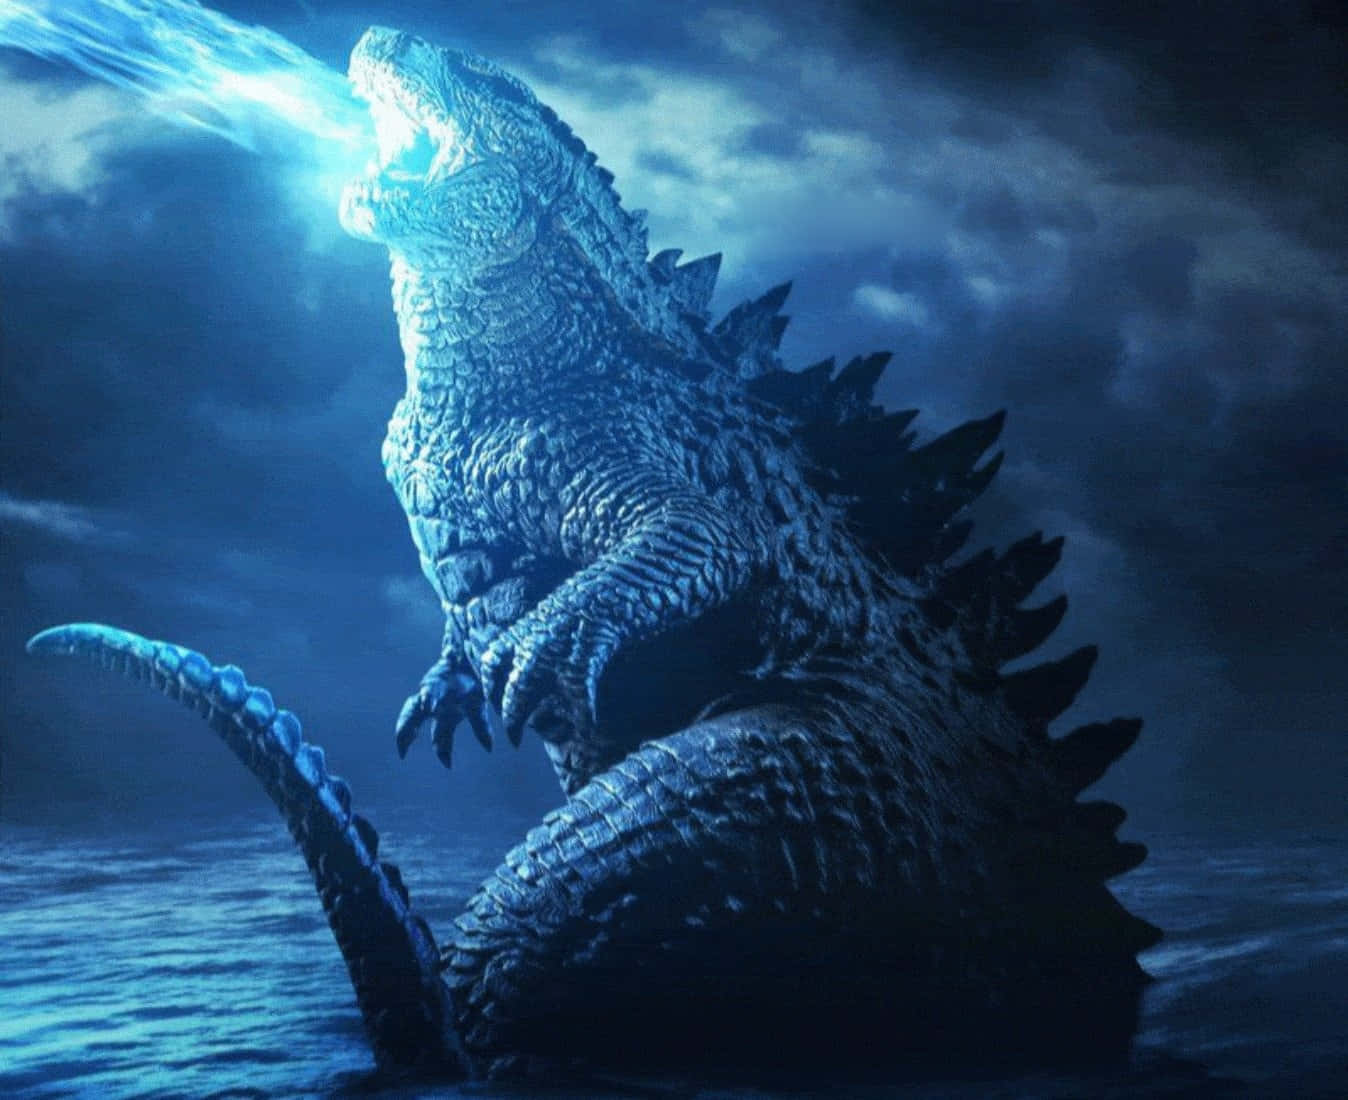 Godzillaneon Blau Laserstrahl Im Ozean Bild